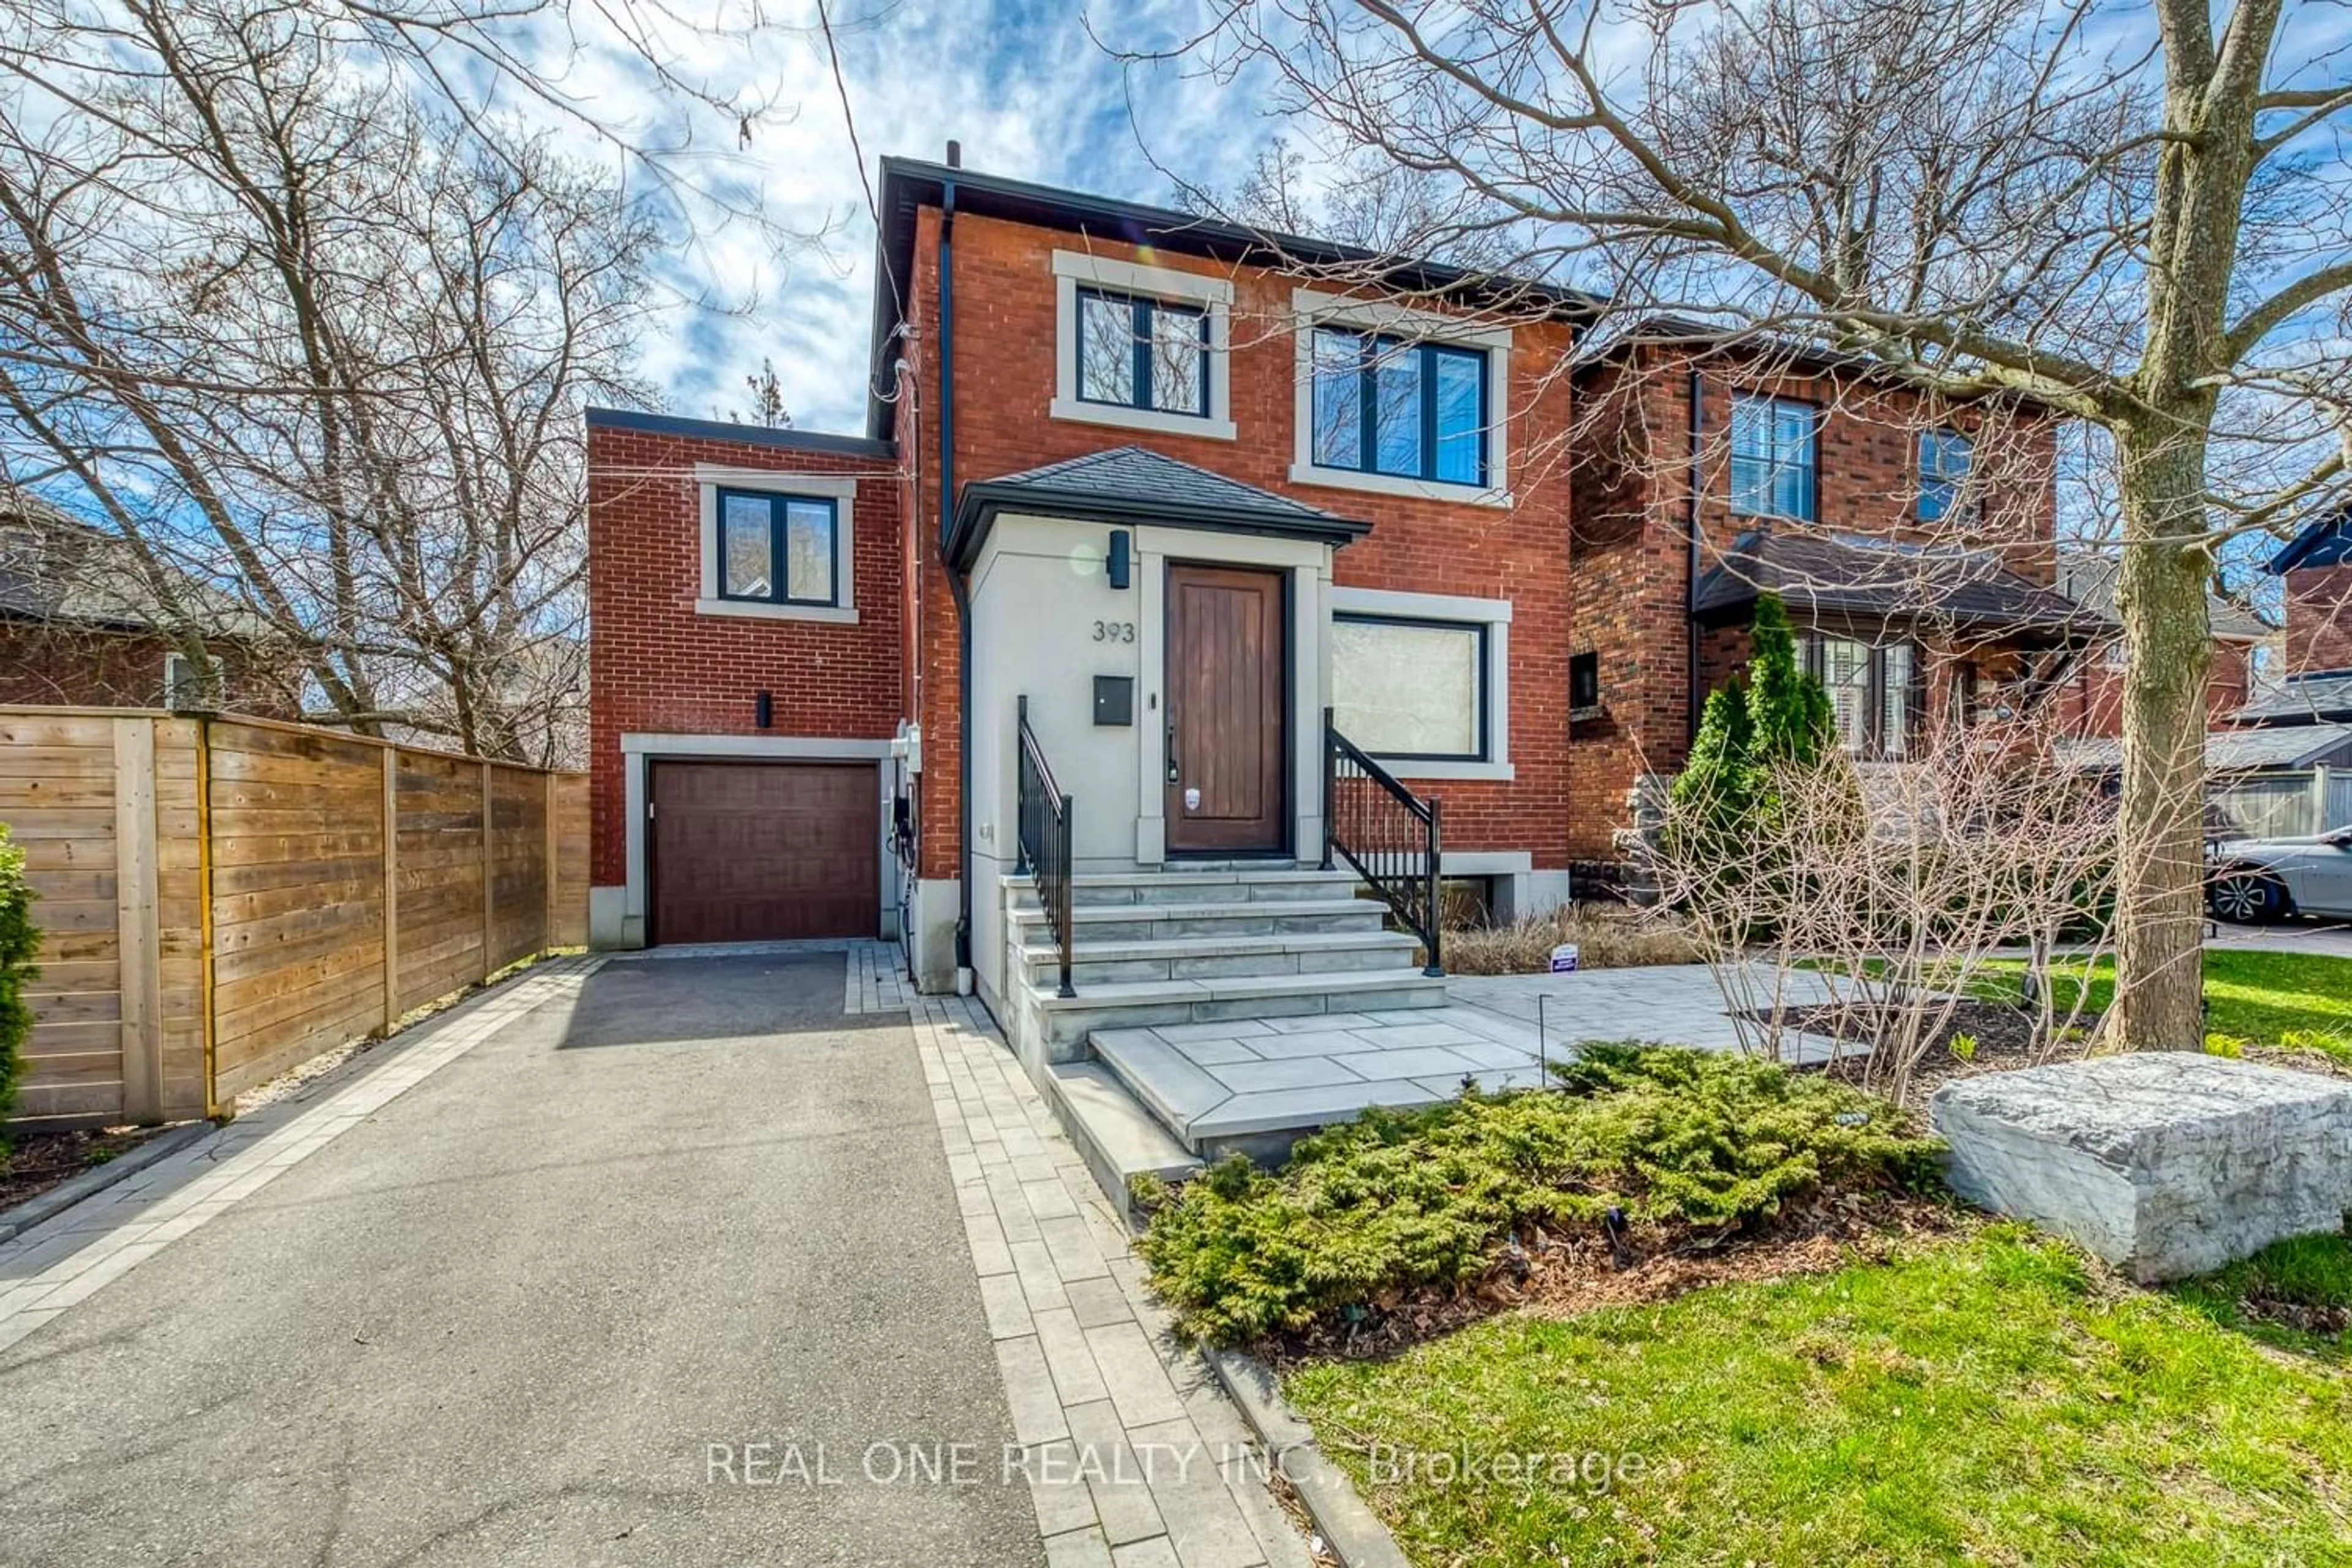 Home with brick exterior material for 393 Summerhill Ave, Toronto Ontario M4W 2E3